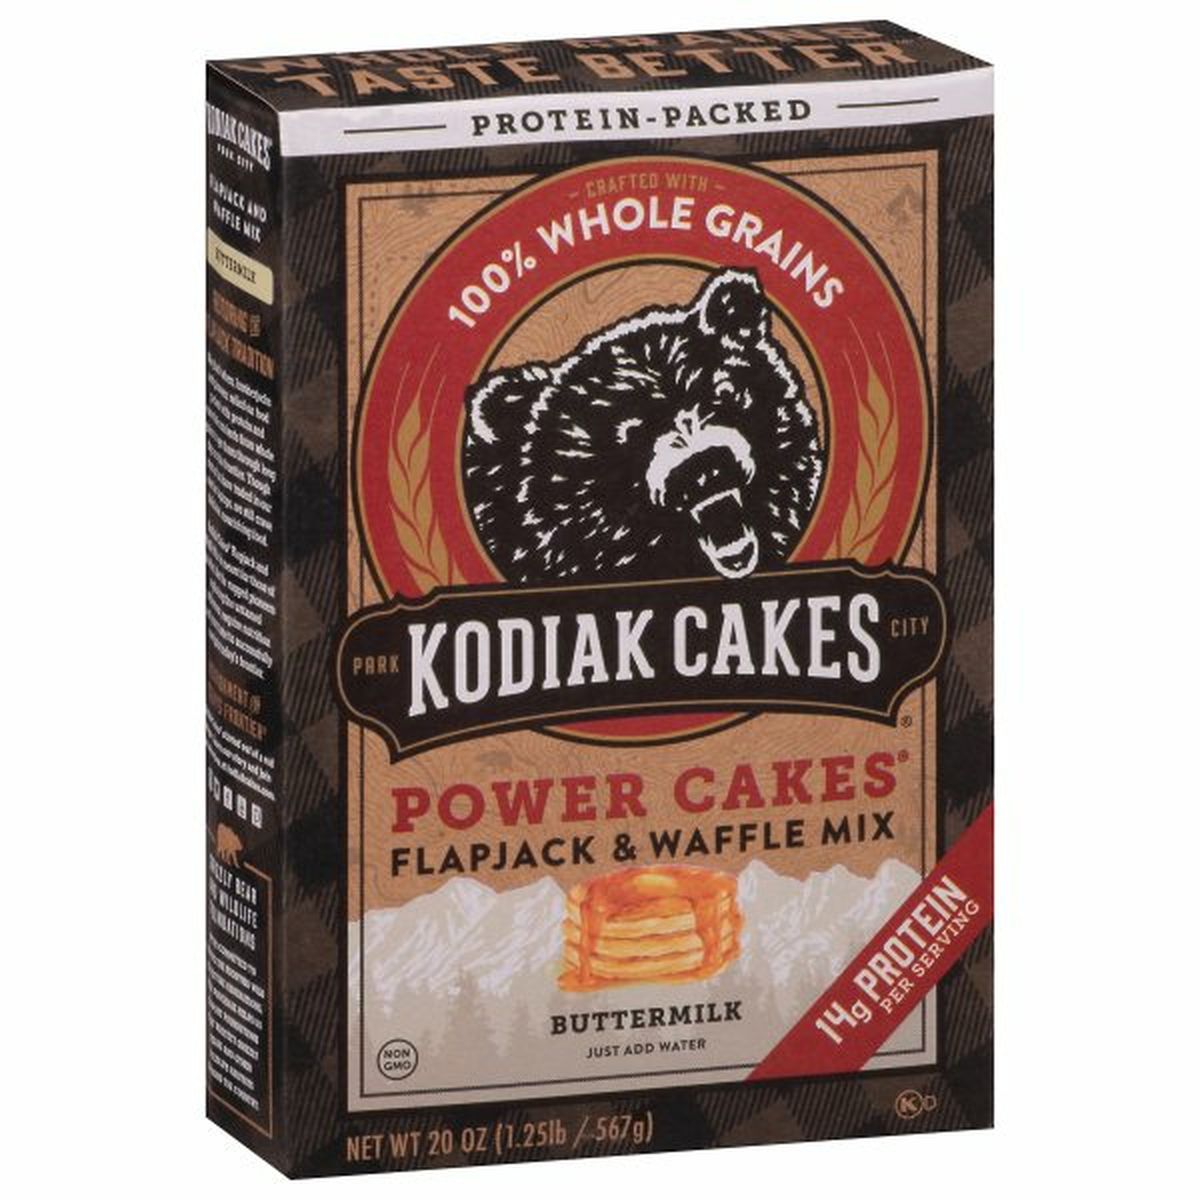 Calories in Kodiak Cakes Power Cakes Flapjack & Waffle Mix, Buttermilk